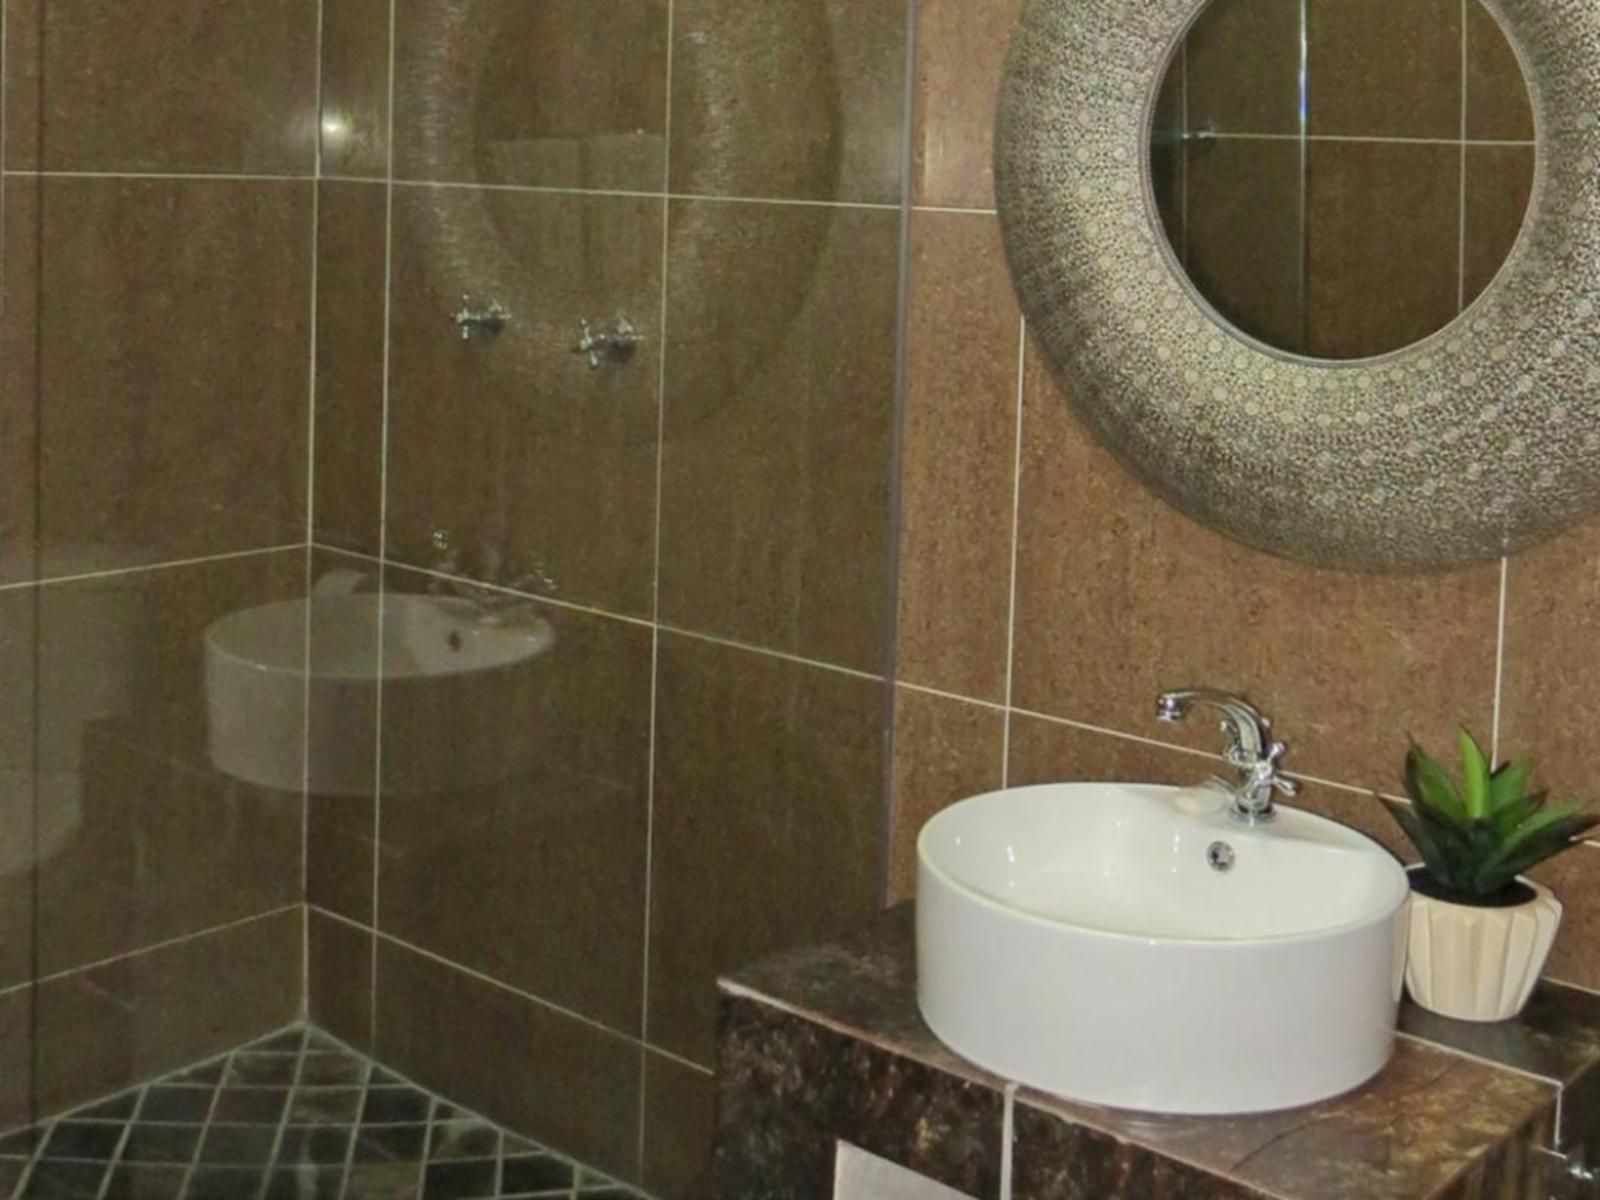 Pensao Guest Lodge Sonheuwel Nelspruit Mpumalanga South Africa Sepia Tones, Bathroom